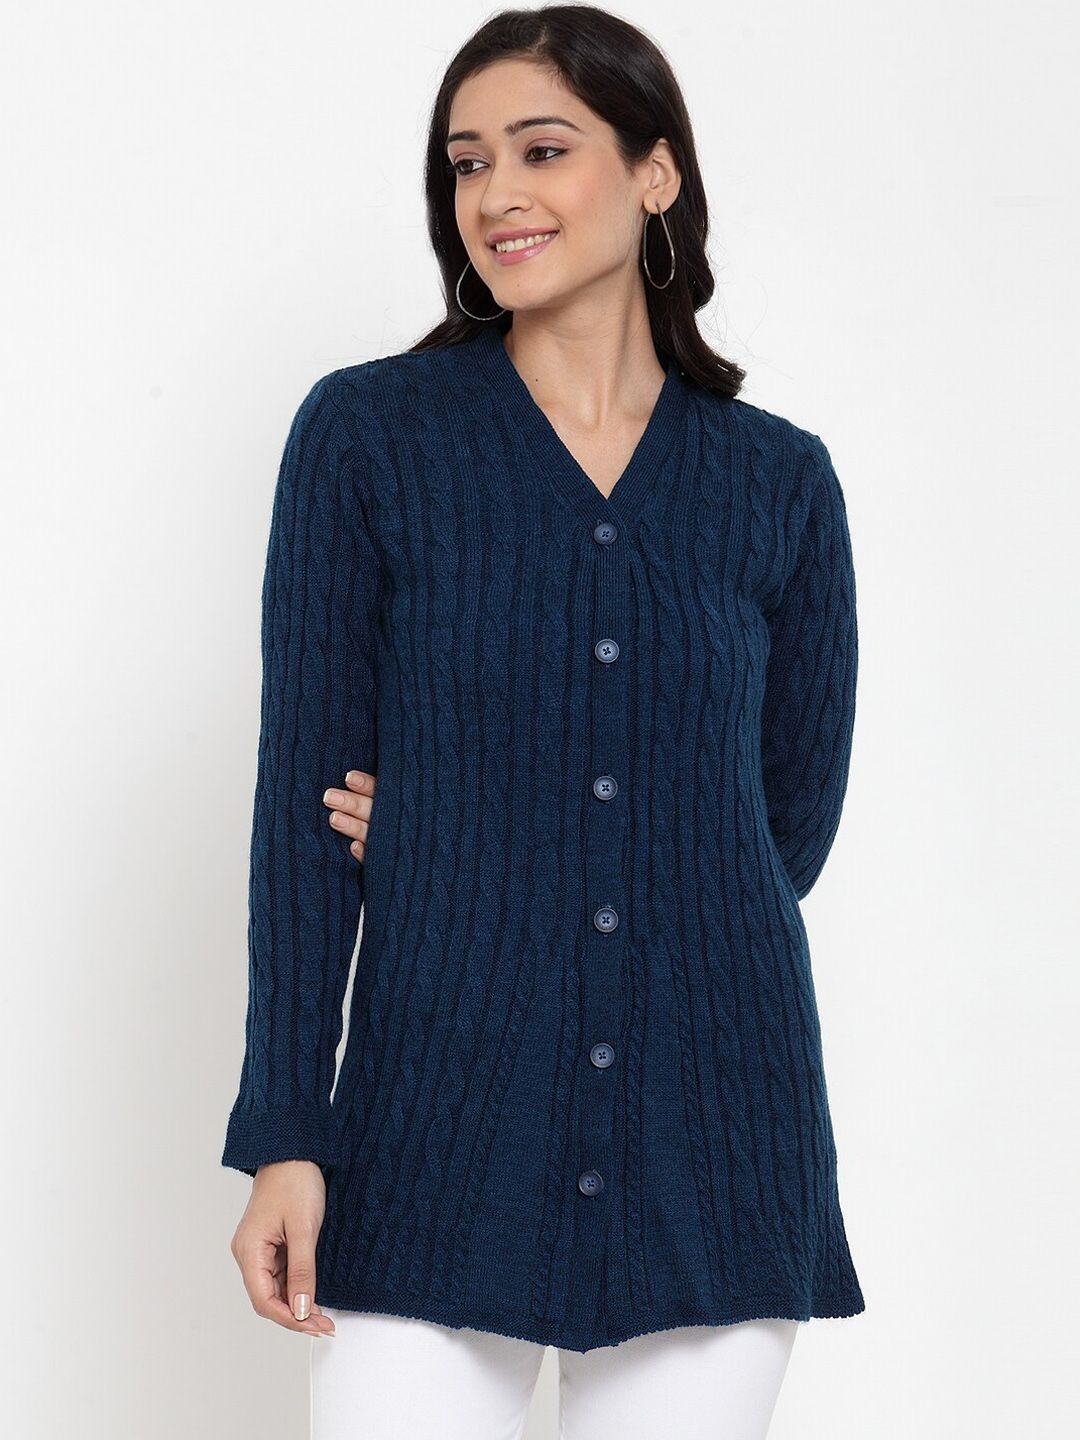 Kalt Women Teal Blue Self Design Cardigan Sweater Price in India